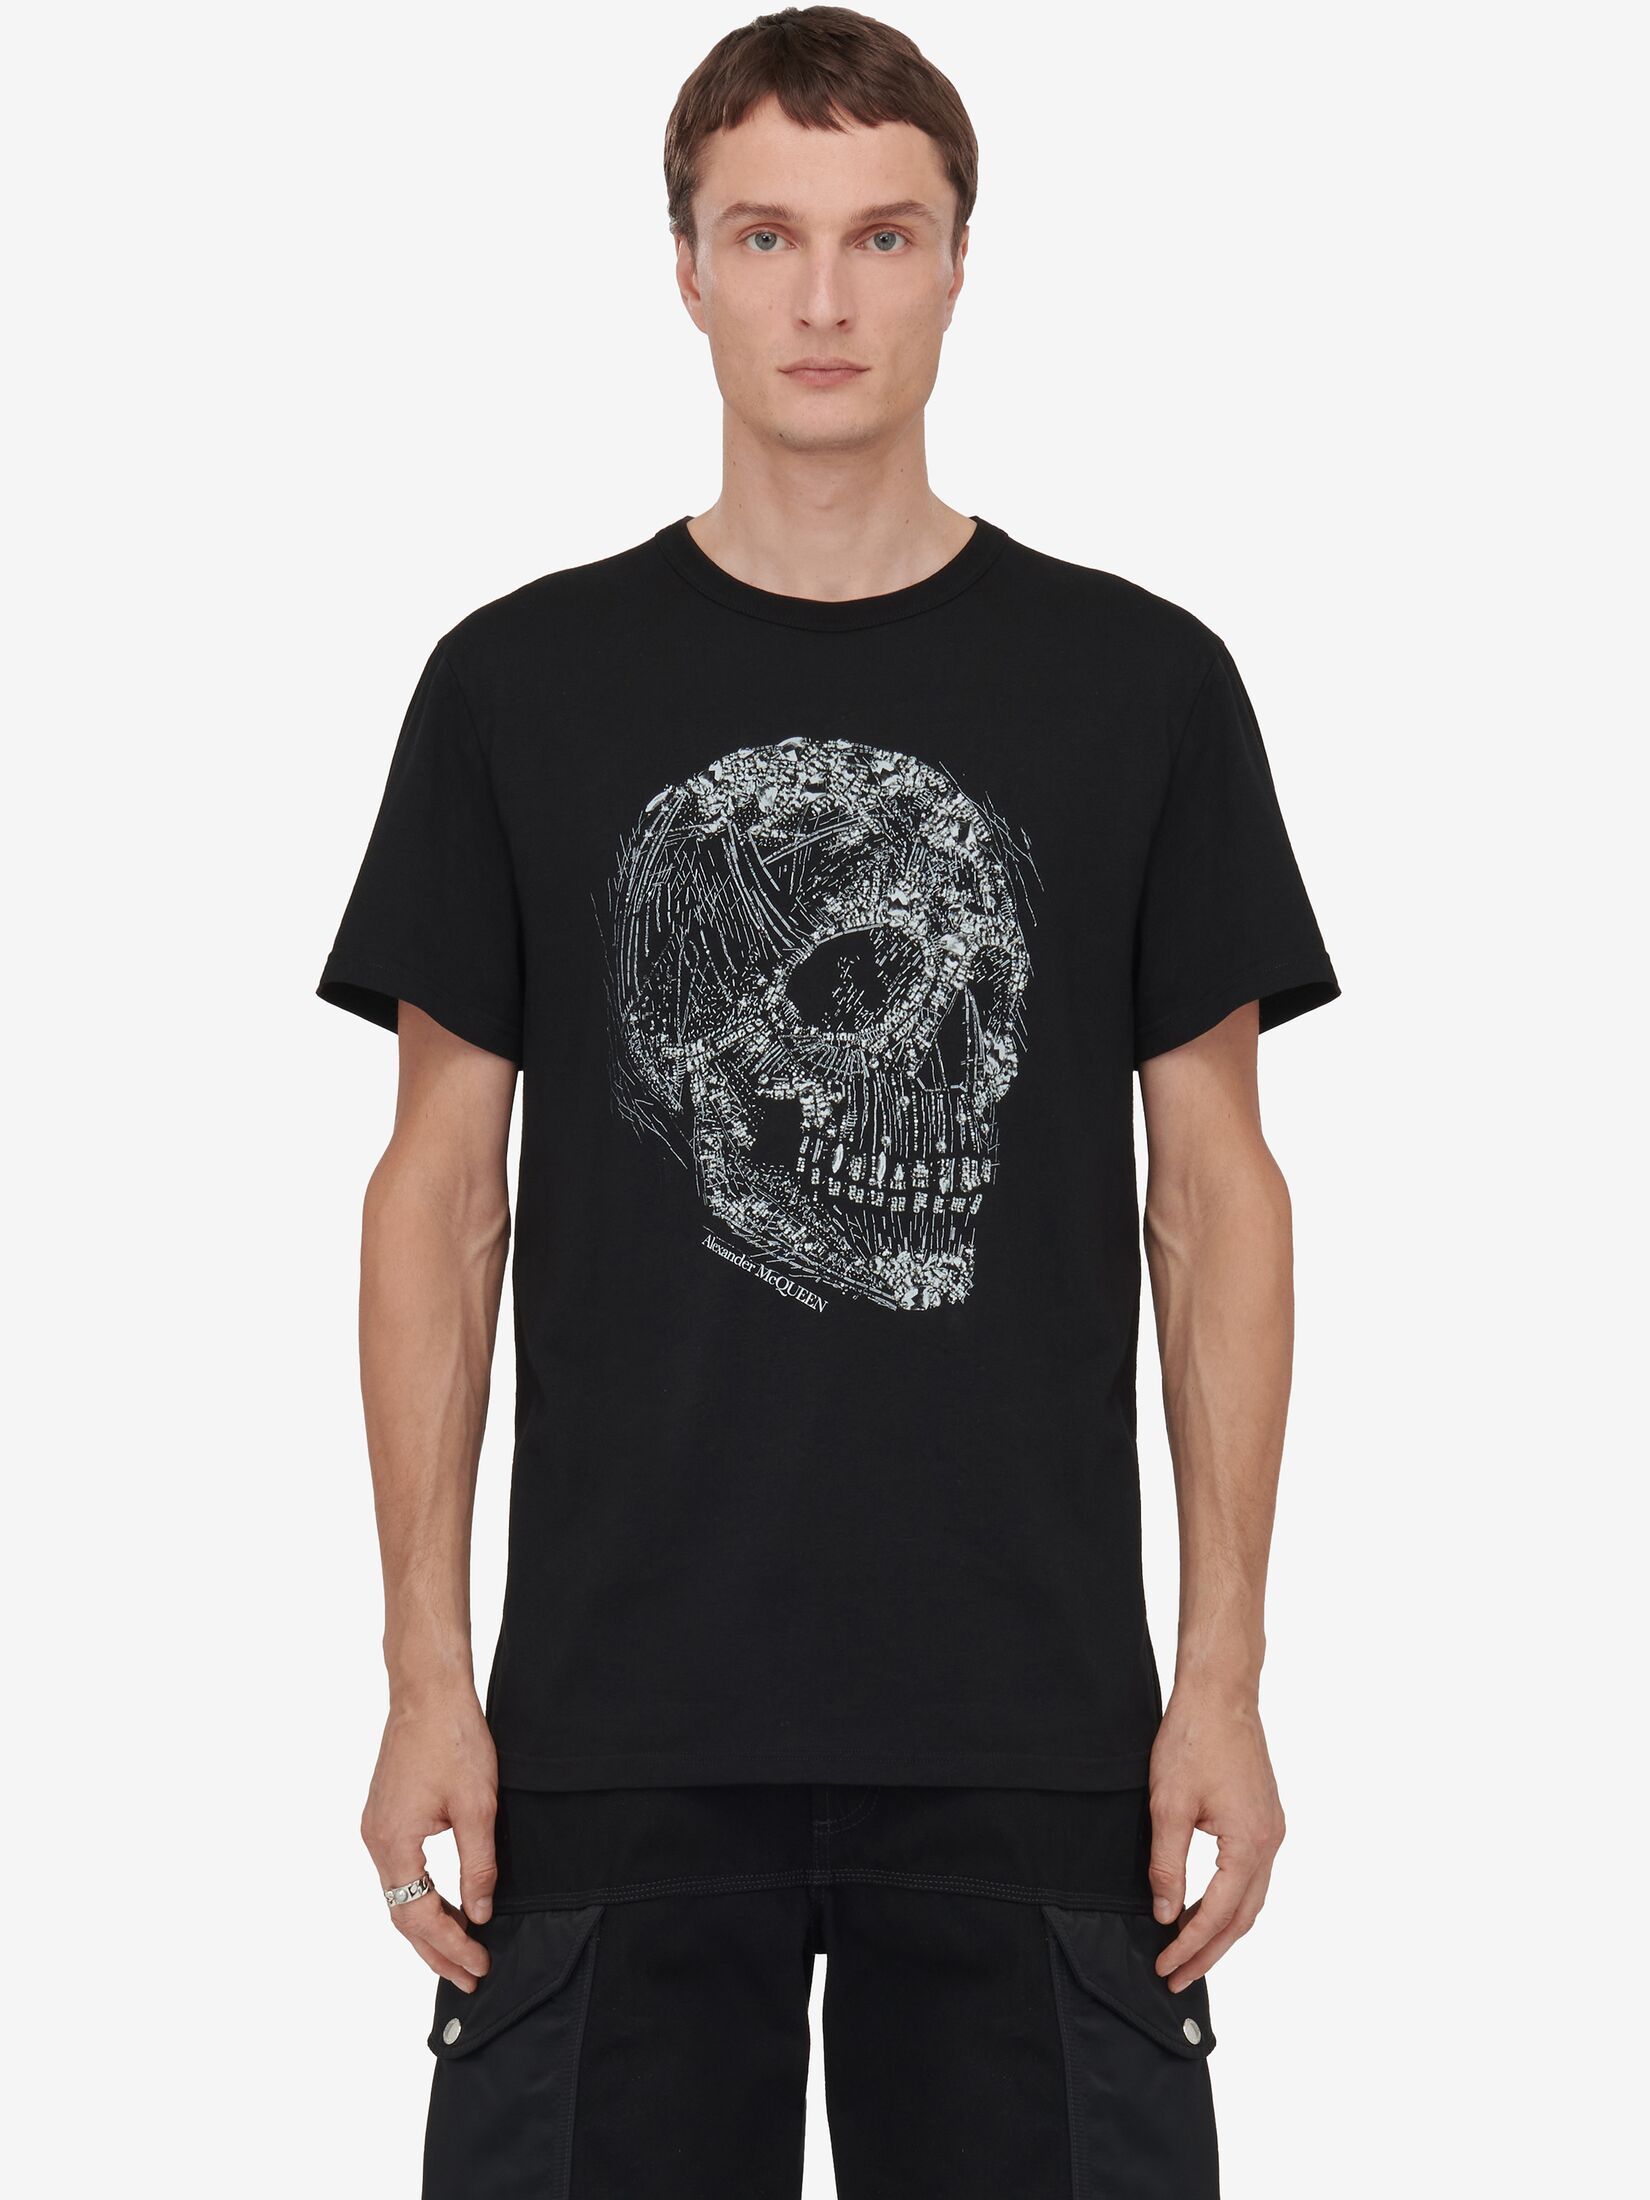 Crystal Skull T-shirt in Black/White McQueen | Alexander US